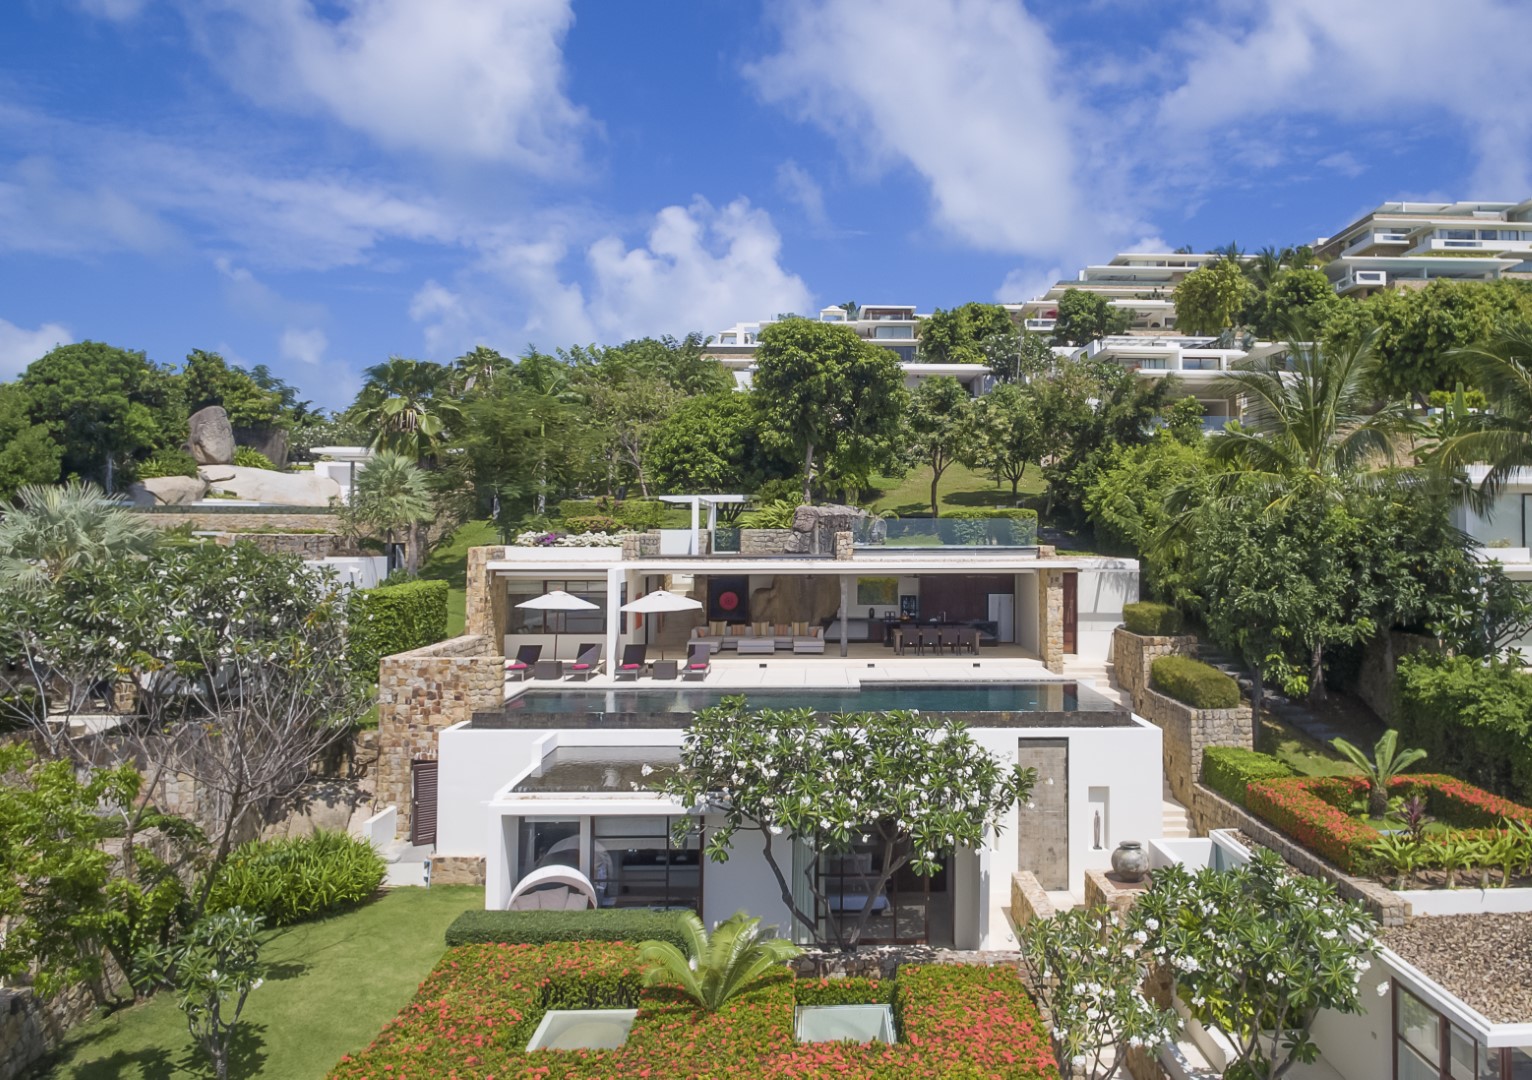 4 bedroom sea view villa, modern design